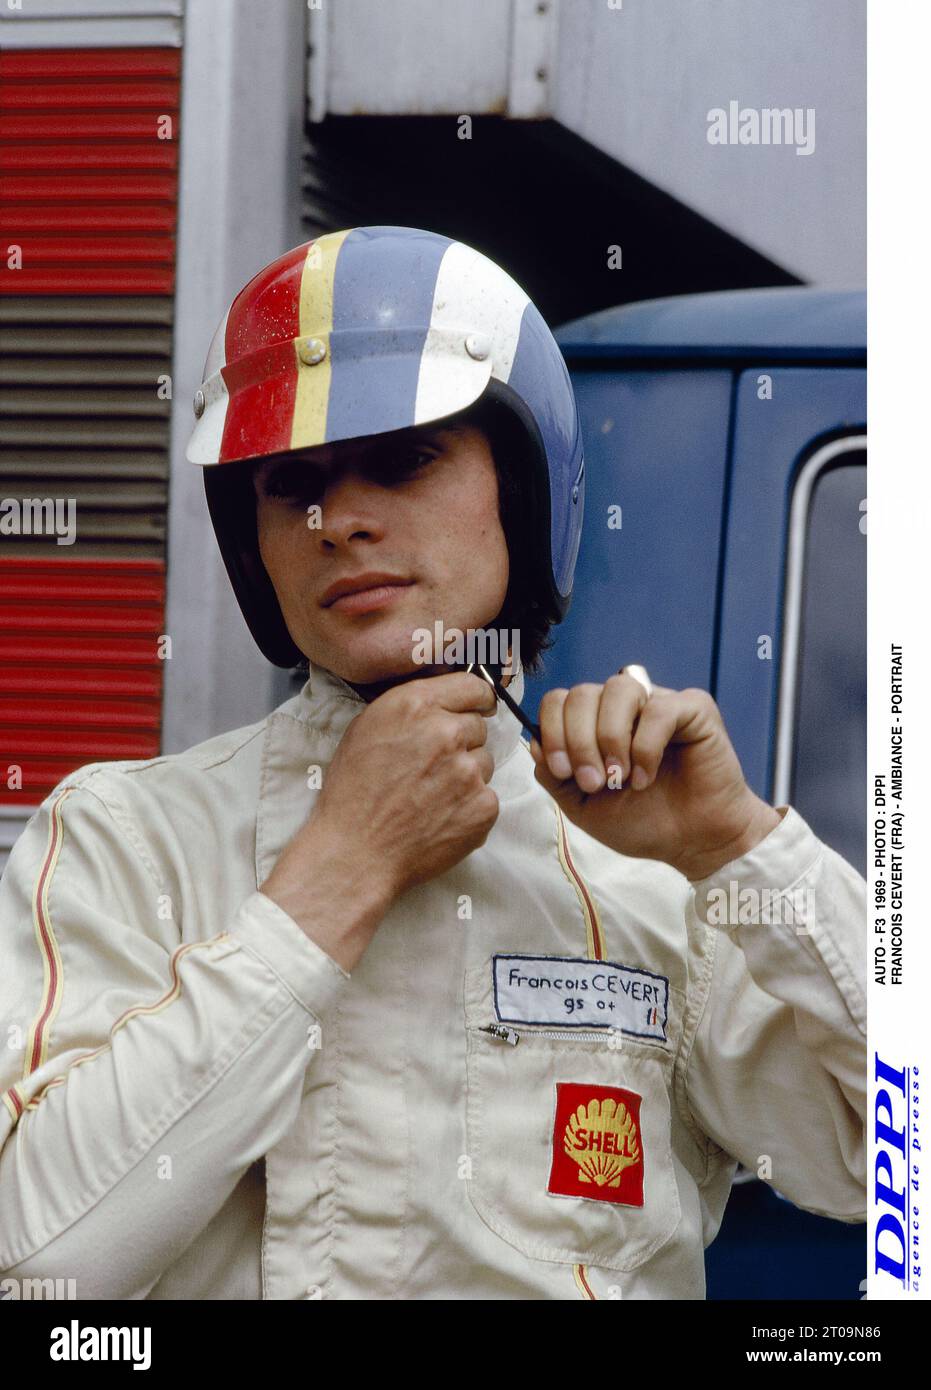 AUTO - F3 1969 - PHOTO : DPPI FRANCOIS CEVERT (FRA) - AMBIANCE - PORTRAIT Stock Photo